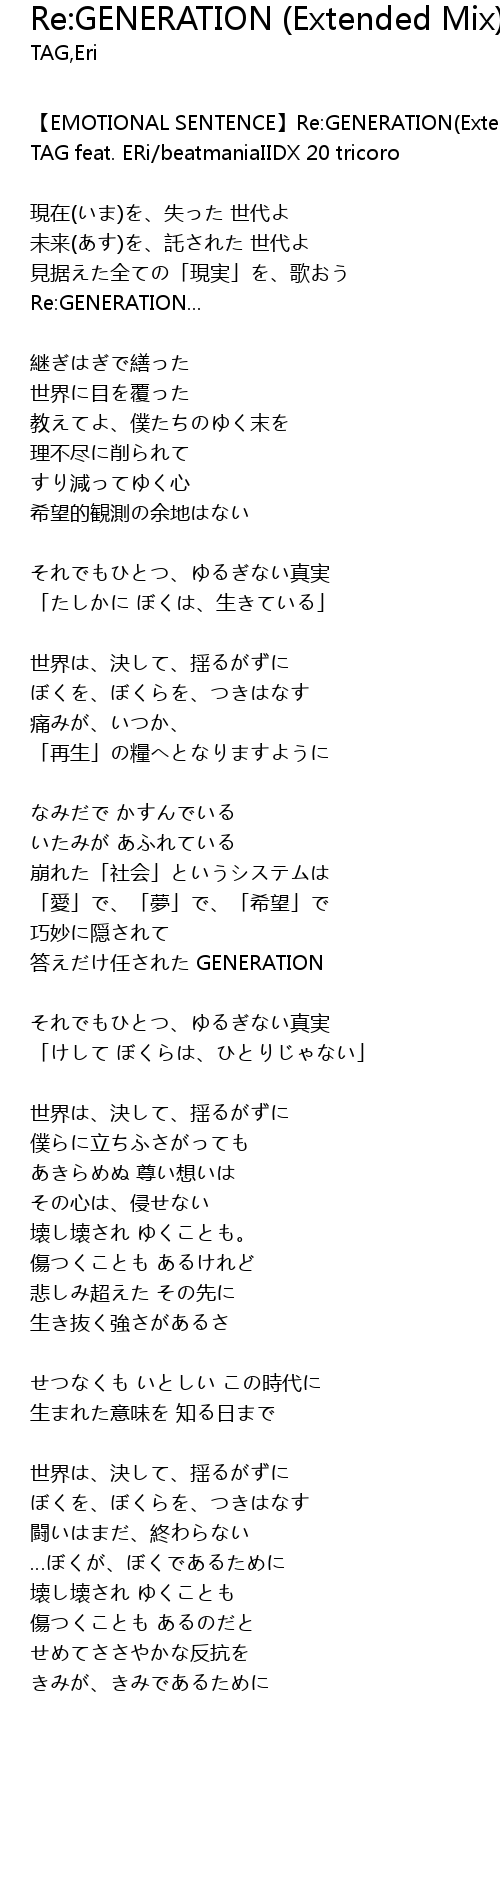 Re Generation Extended Mix 歌词 歌词网